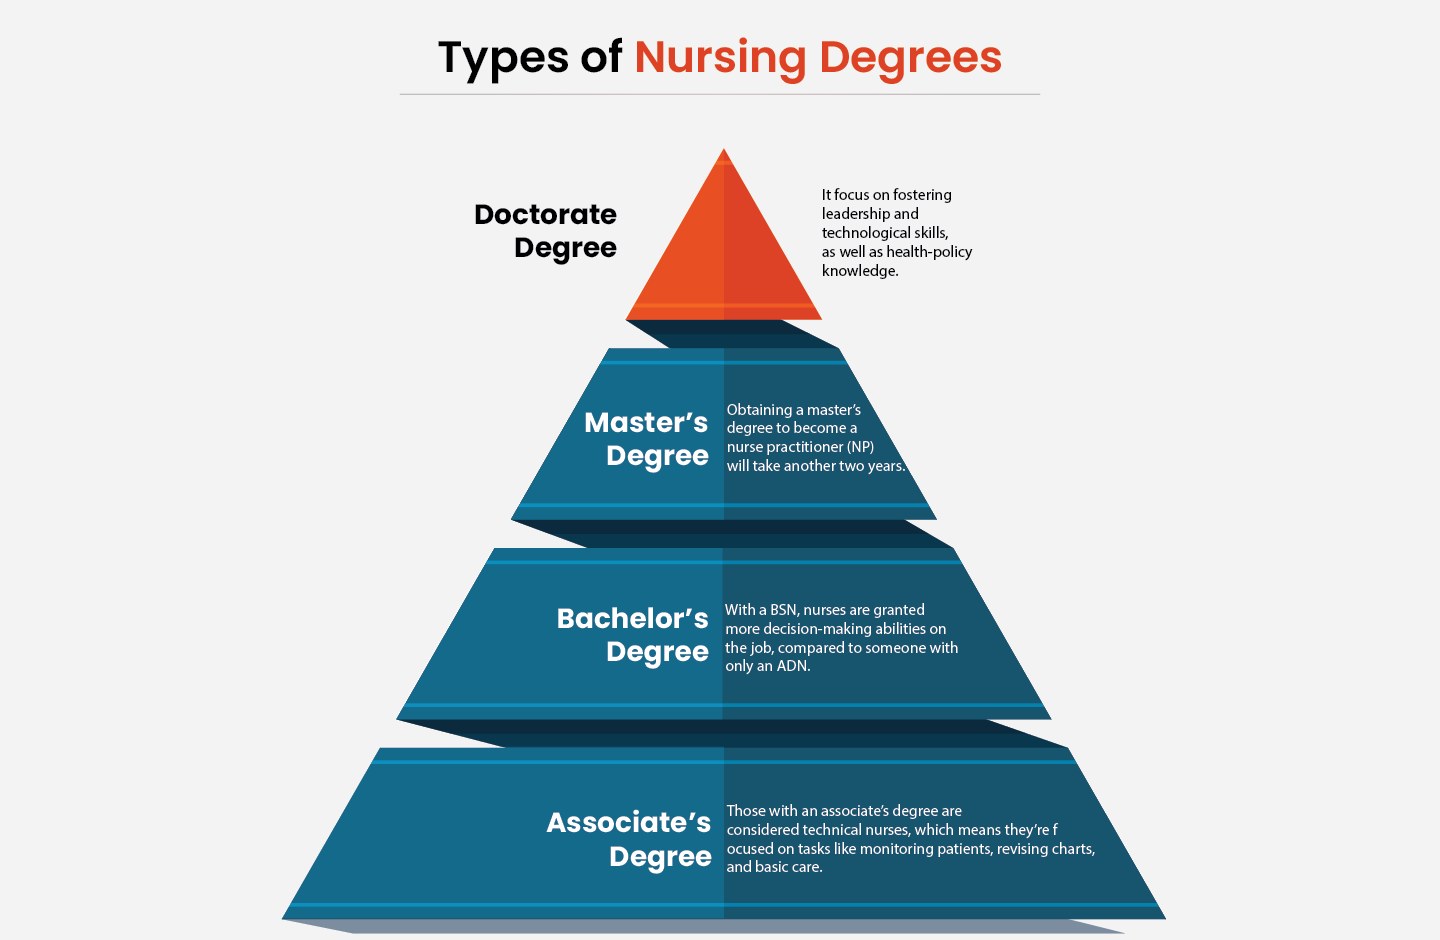 Does It Matter Where You Get Your Nursing Degree? - NDMU